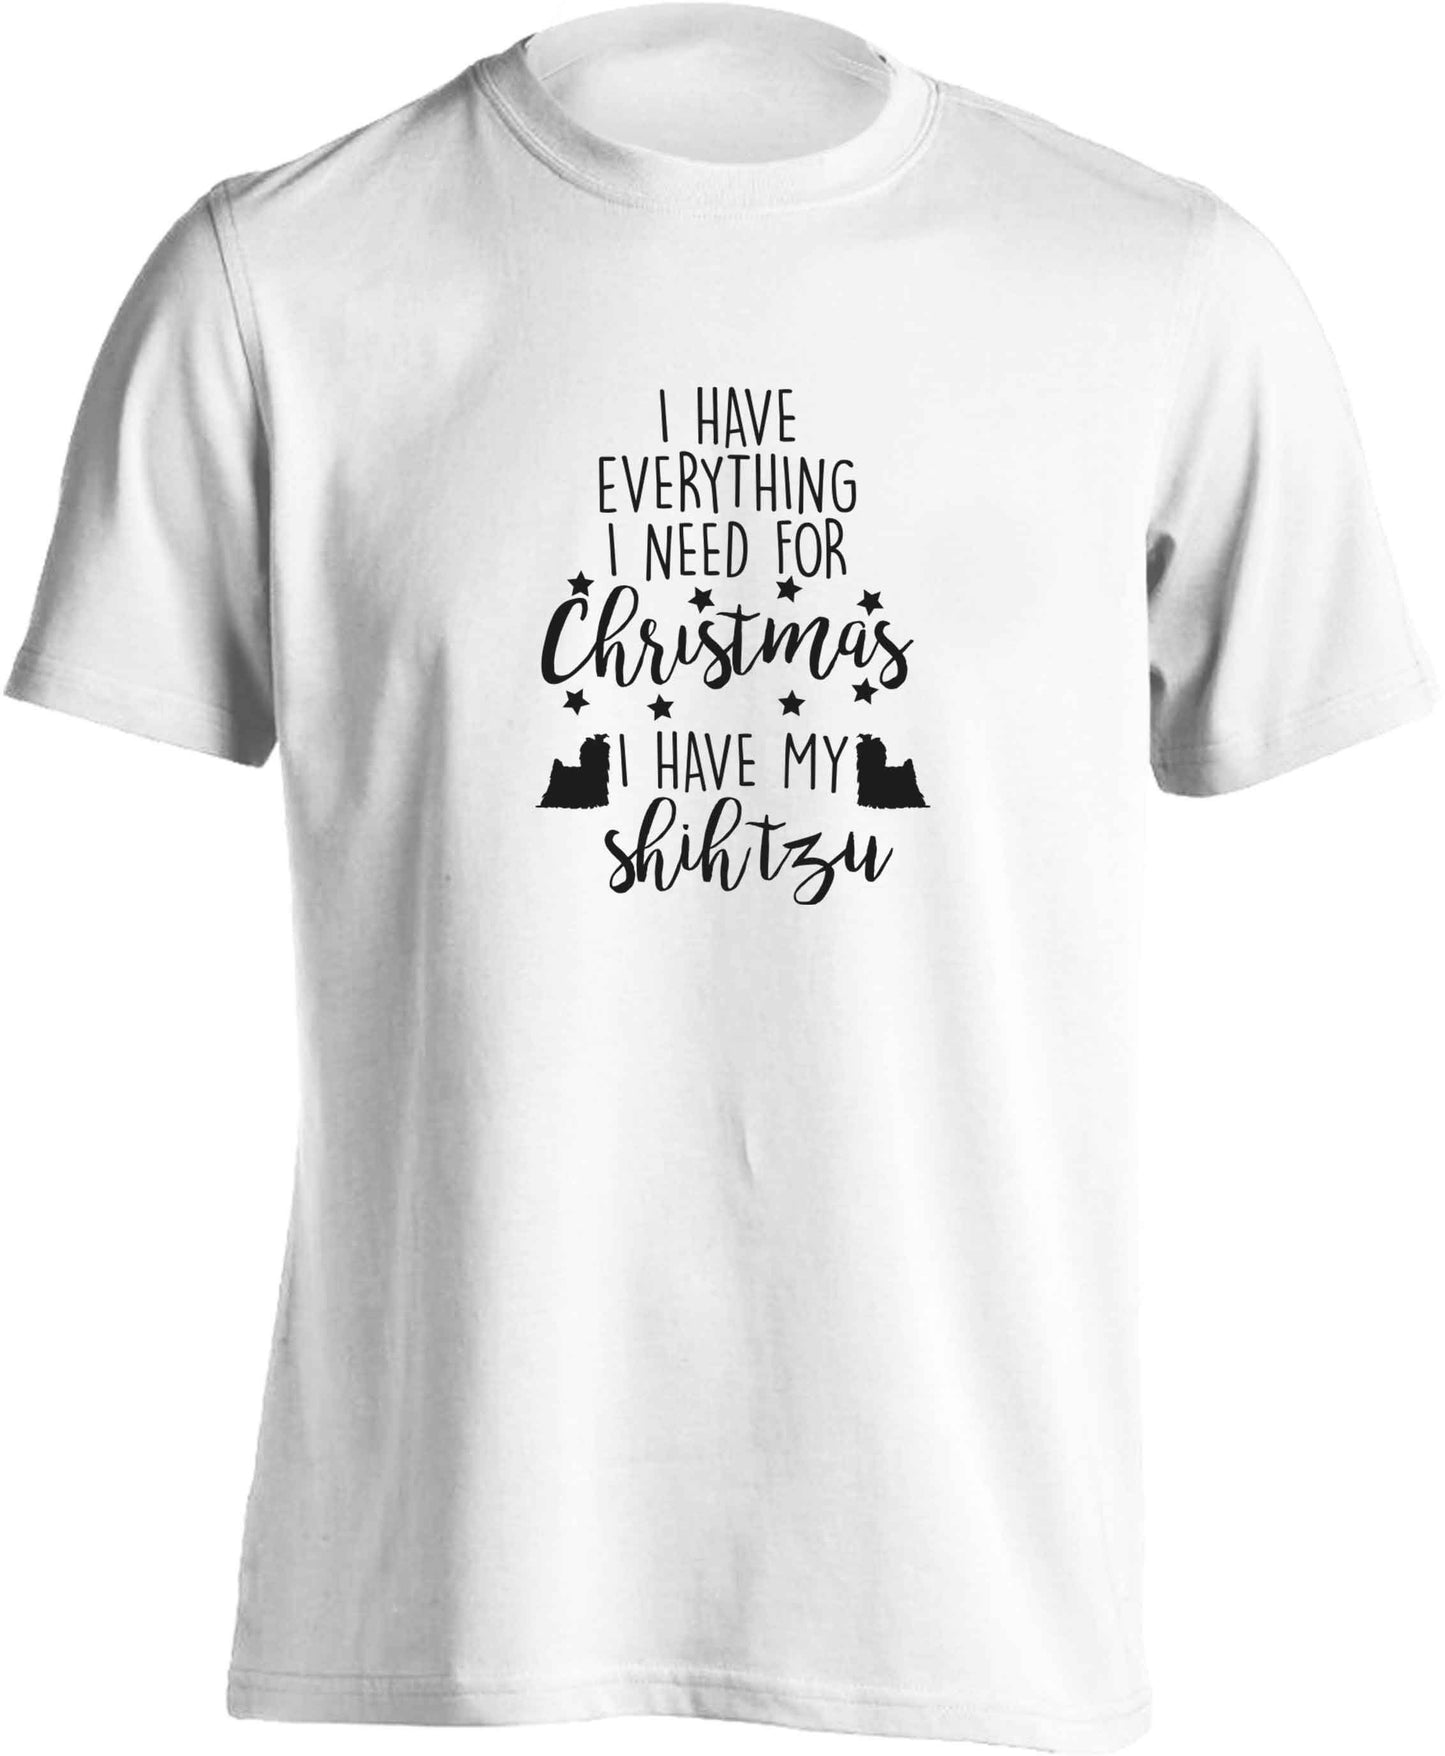 I have everything I need for Christmas I have my shih tzu adults unisex white Tshirt 2XL